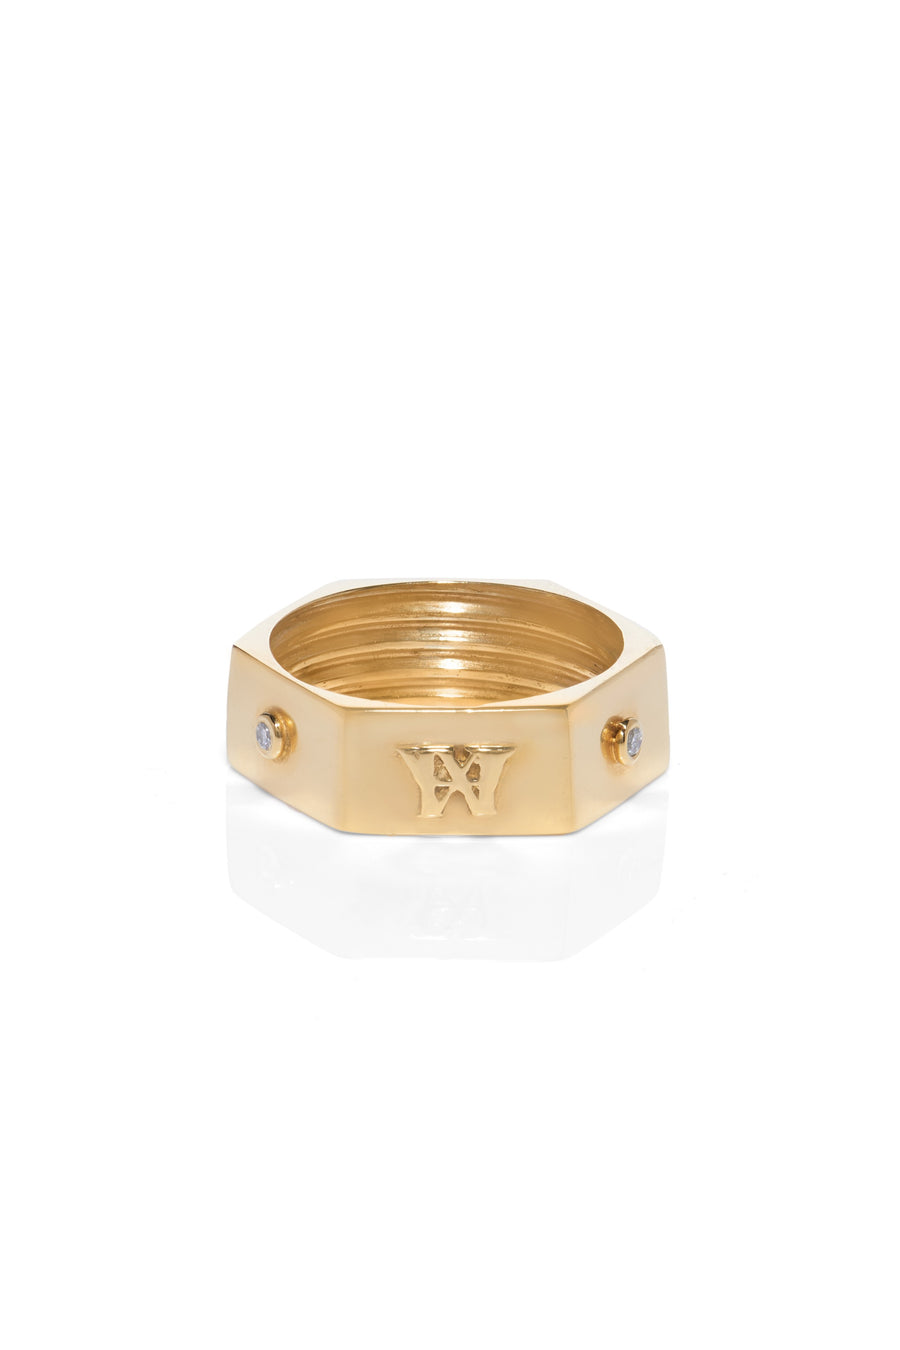 Hardware inspired gold ring unisex